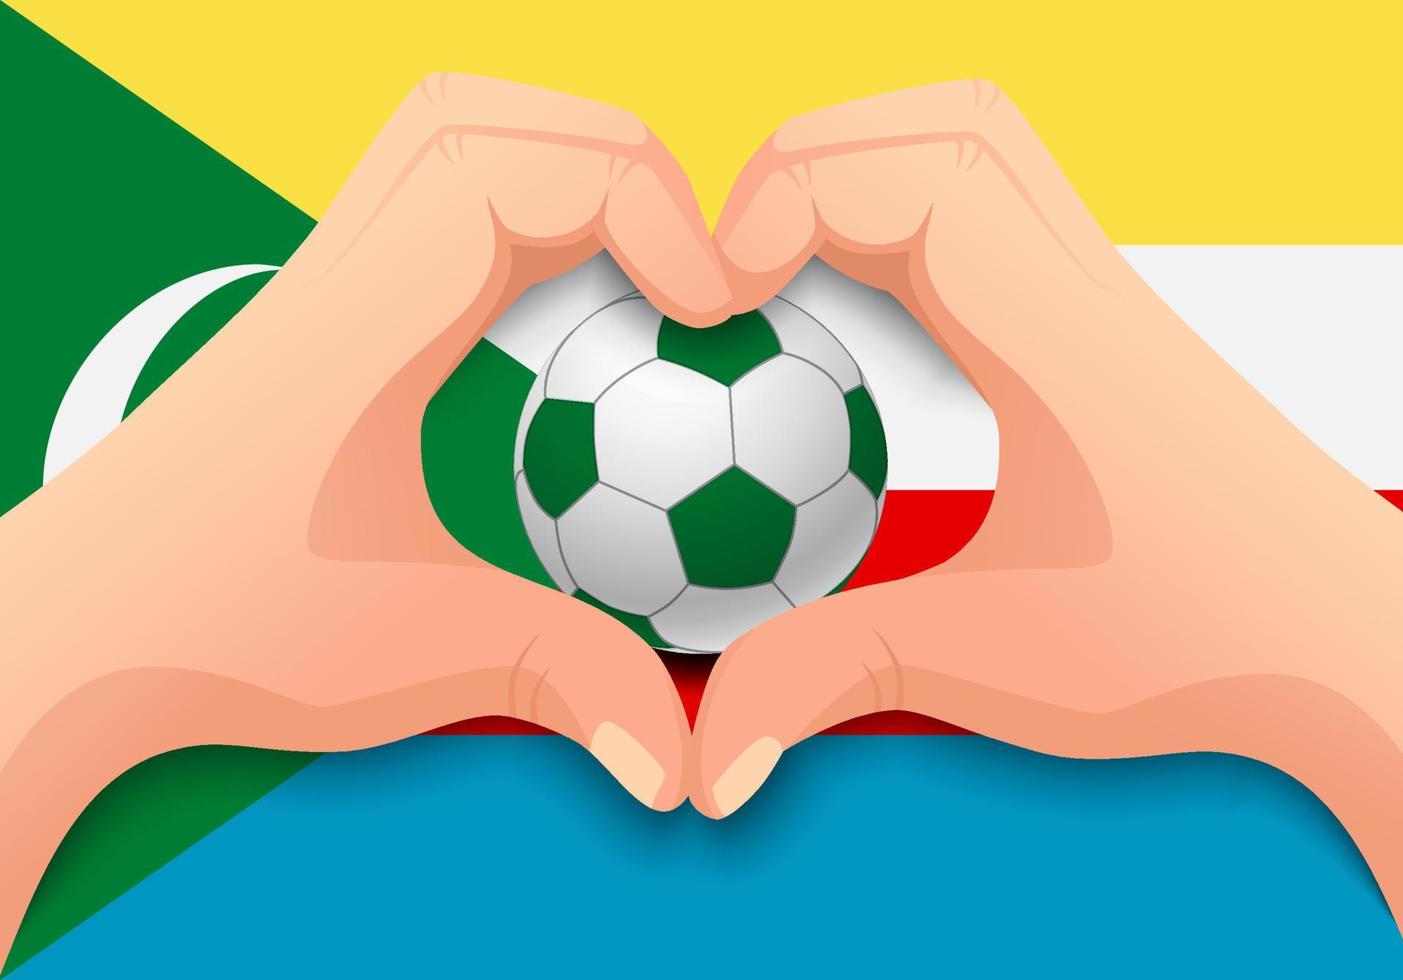 Comoros soccer ball and hand heart shape vector